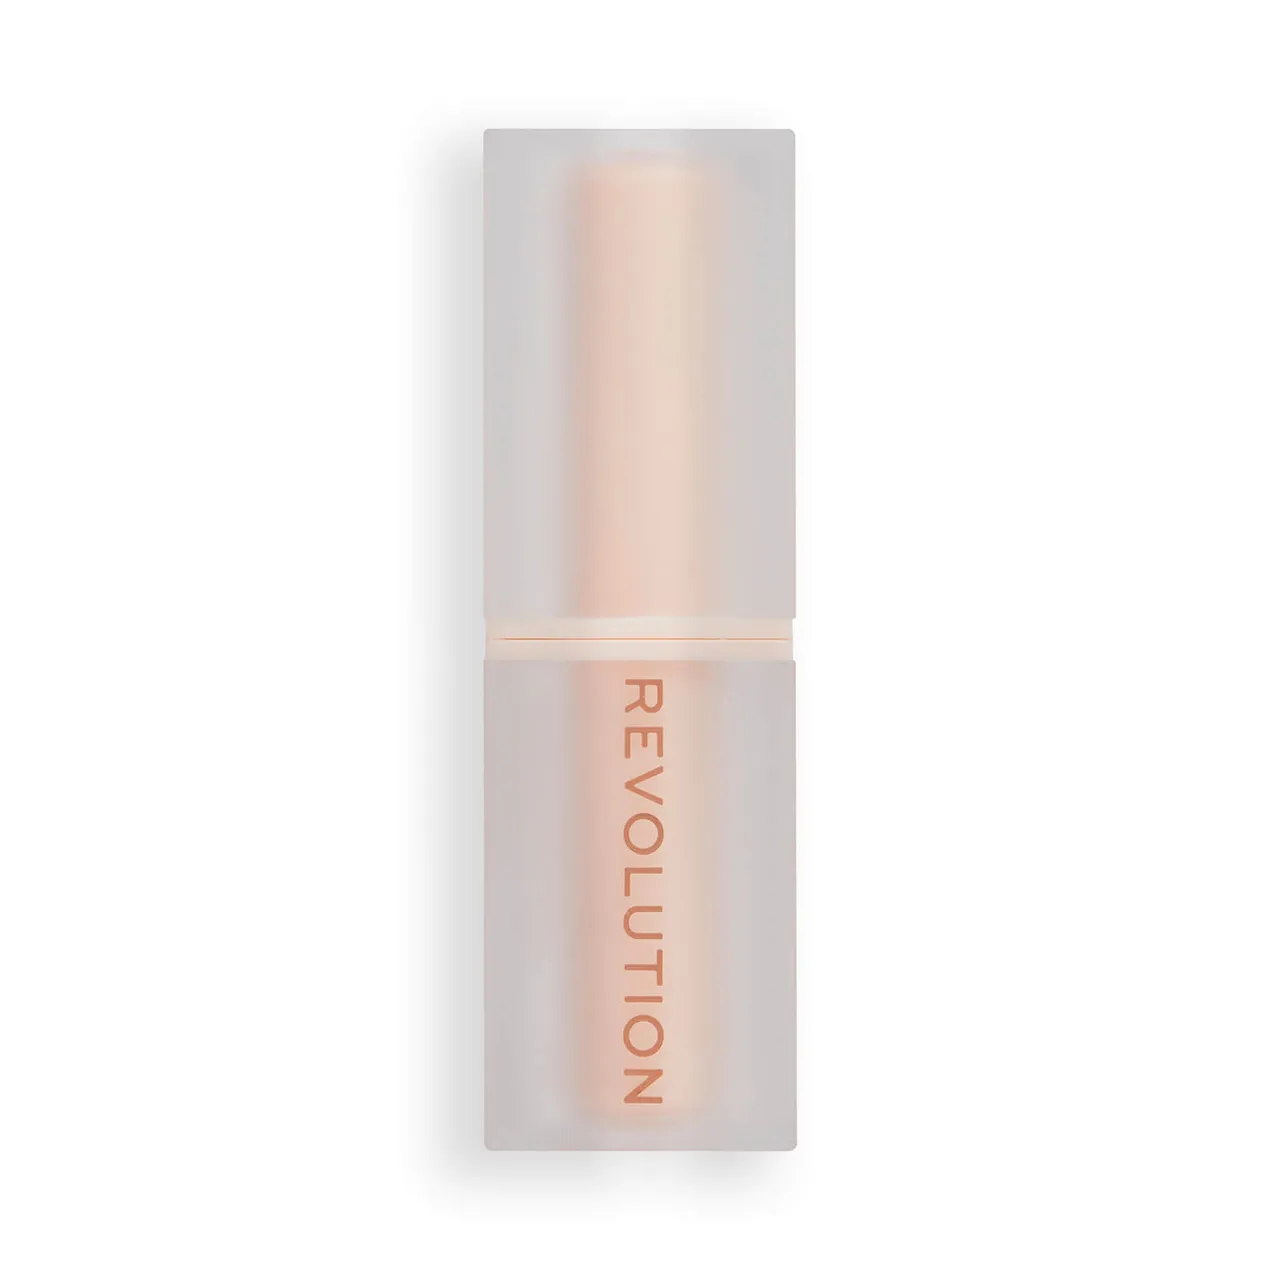 Makeup Revolution Lip Allure Soft Satin Lipstick 50g (Various Shades) - Brunch Pink Nude